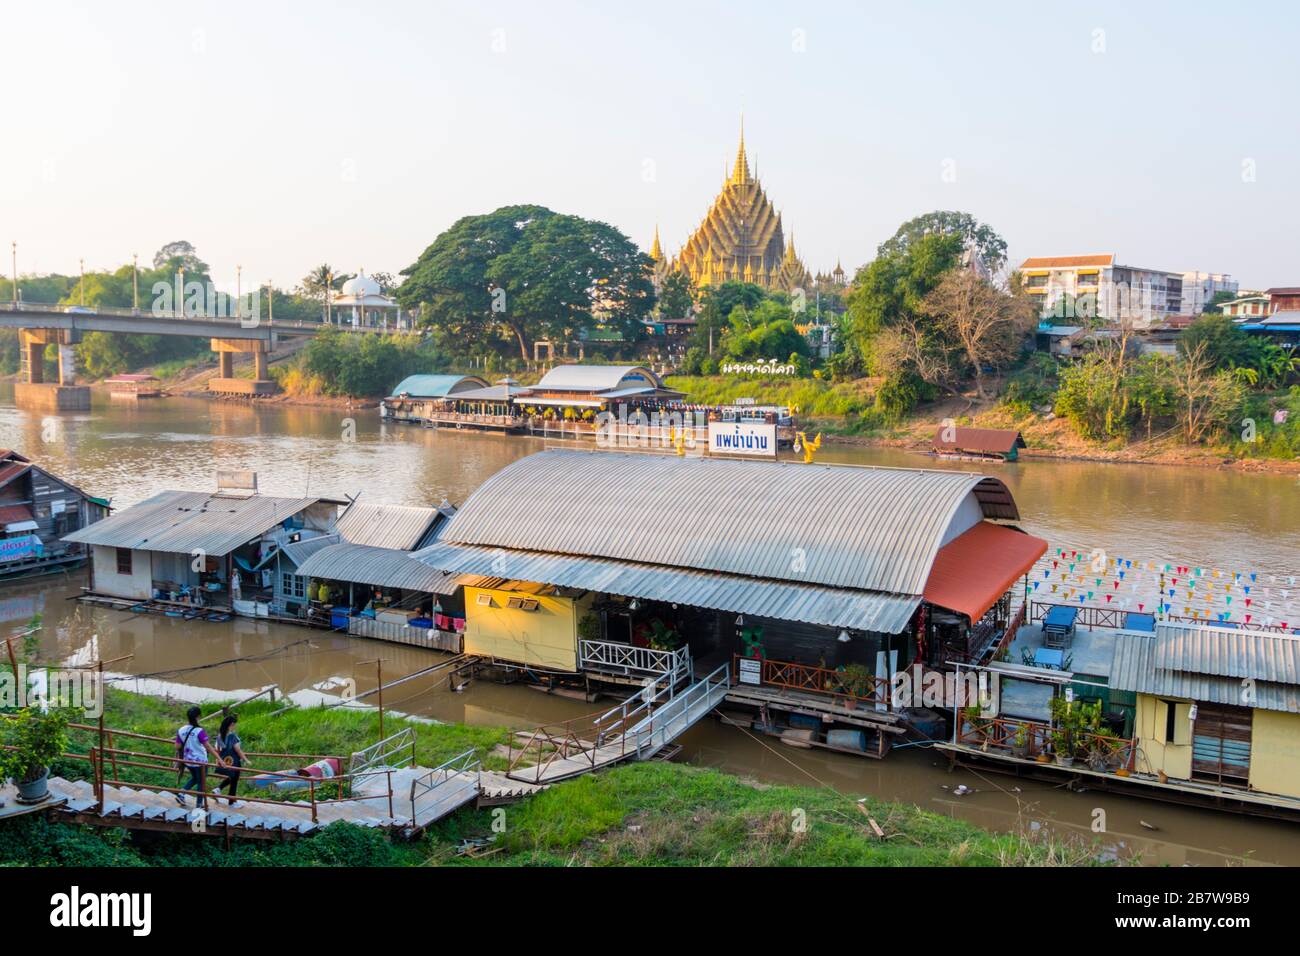 Restaurant boat, River Nan, Phitsanulok, Thailand Stock Photo